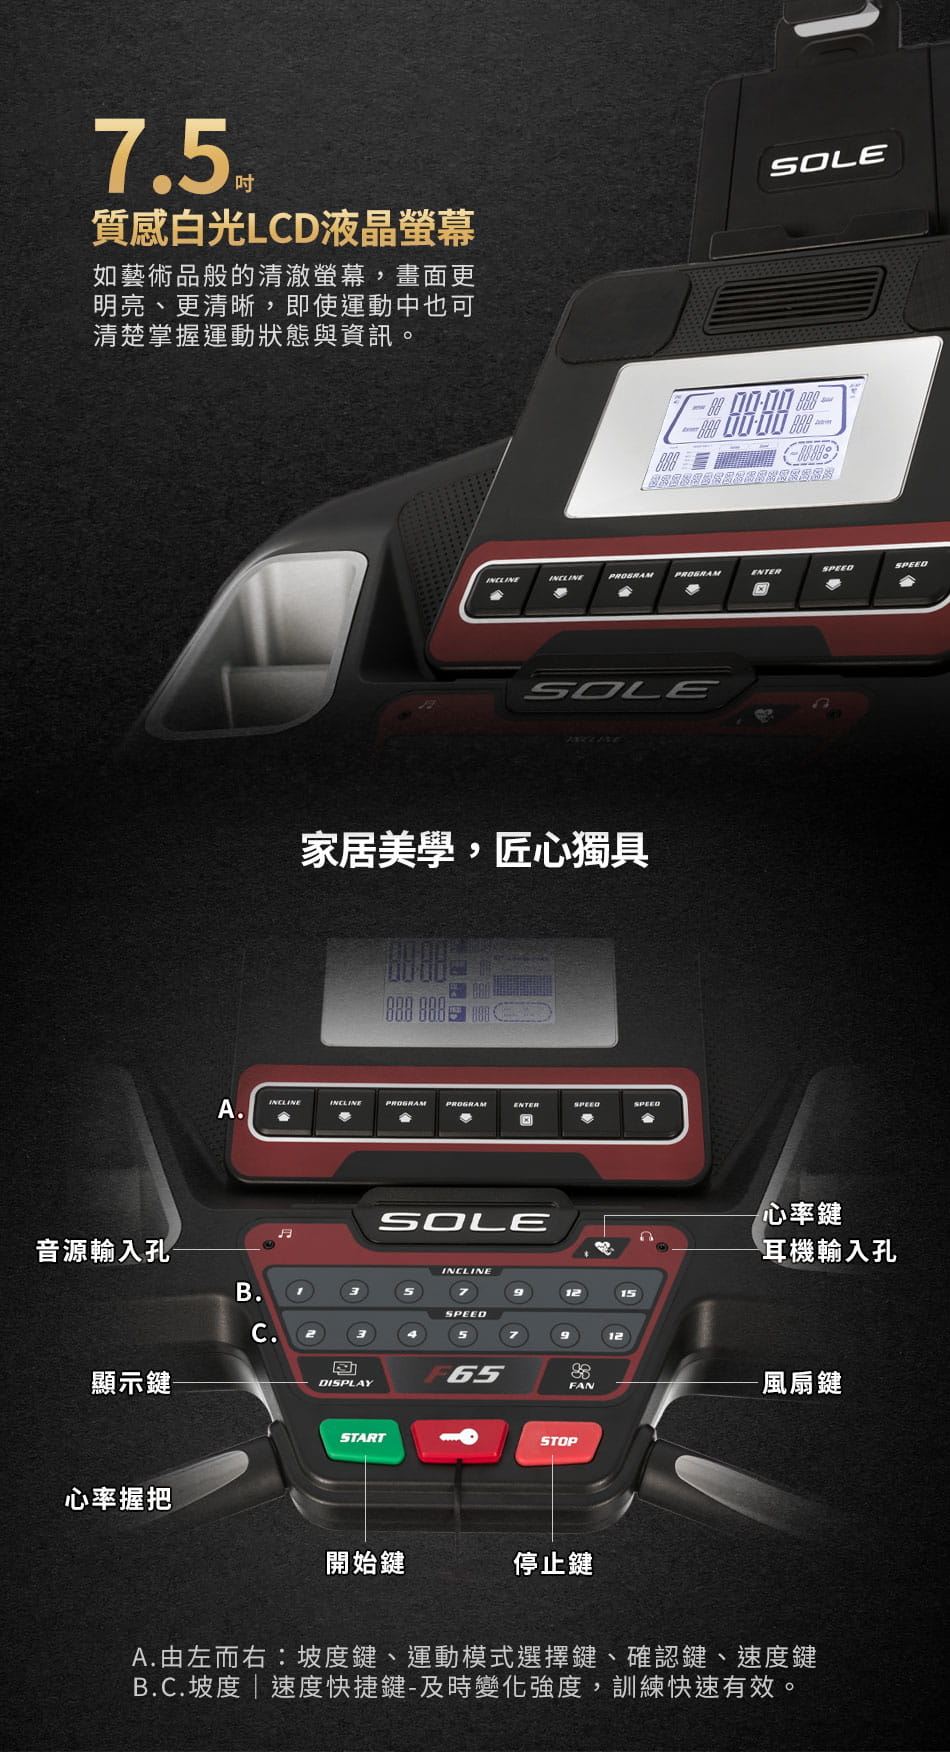 【DYACO】SOLE (索爾) F65 跑步機 電動跑步機 岱宇國際Dyaco 2